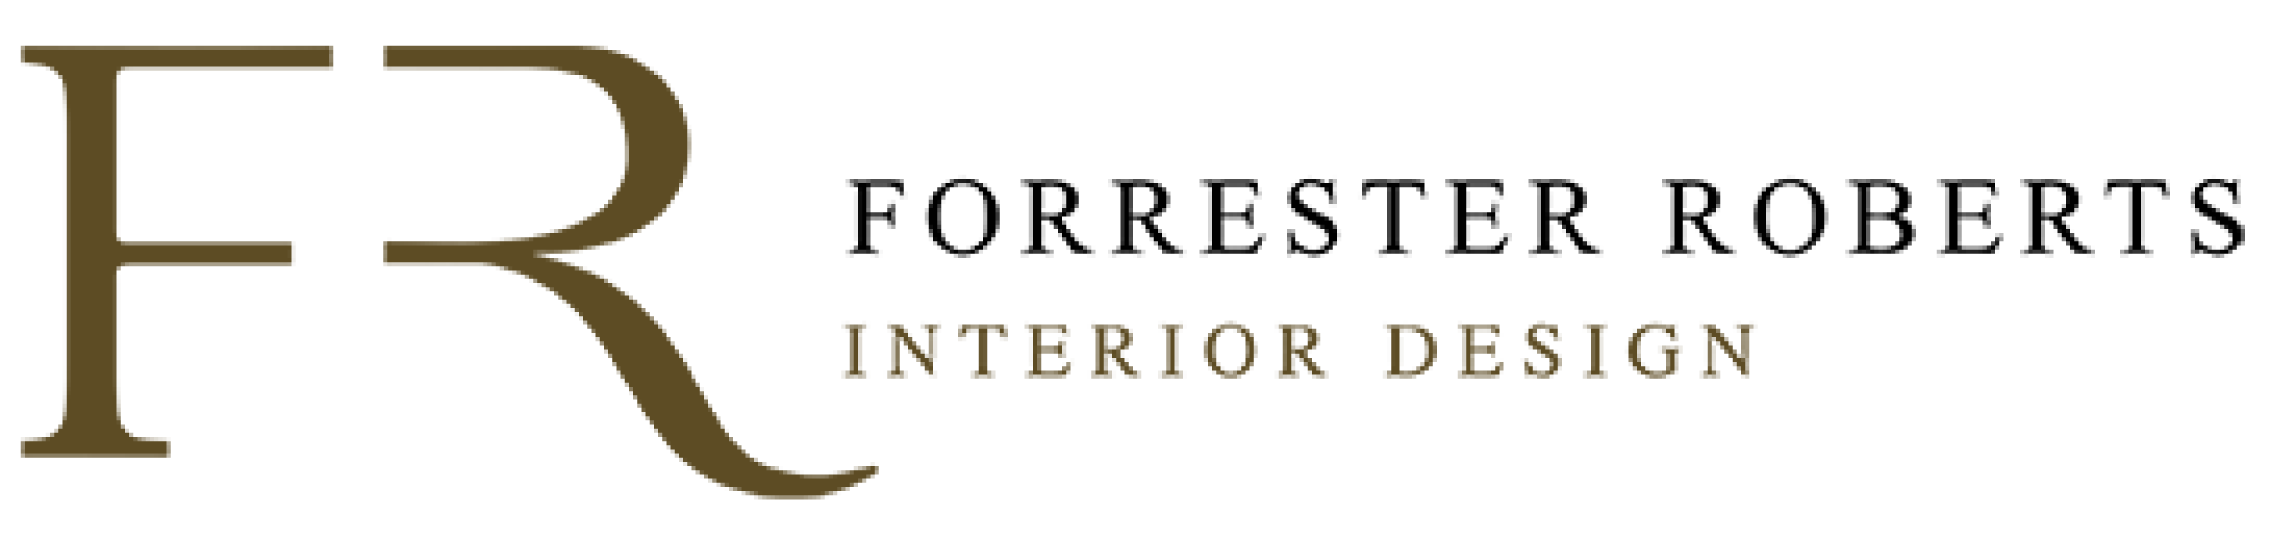 Forrester Roberts Interior Design